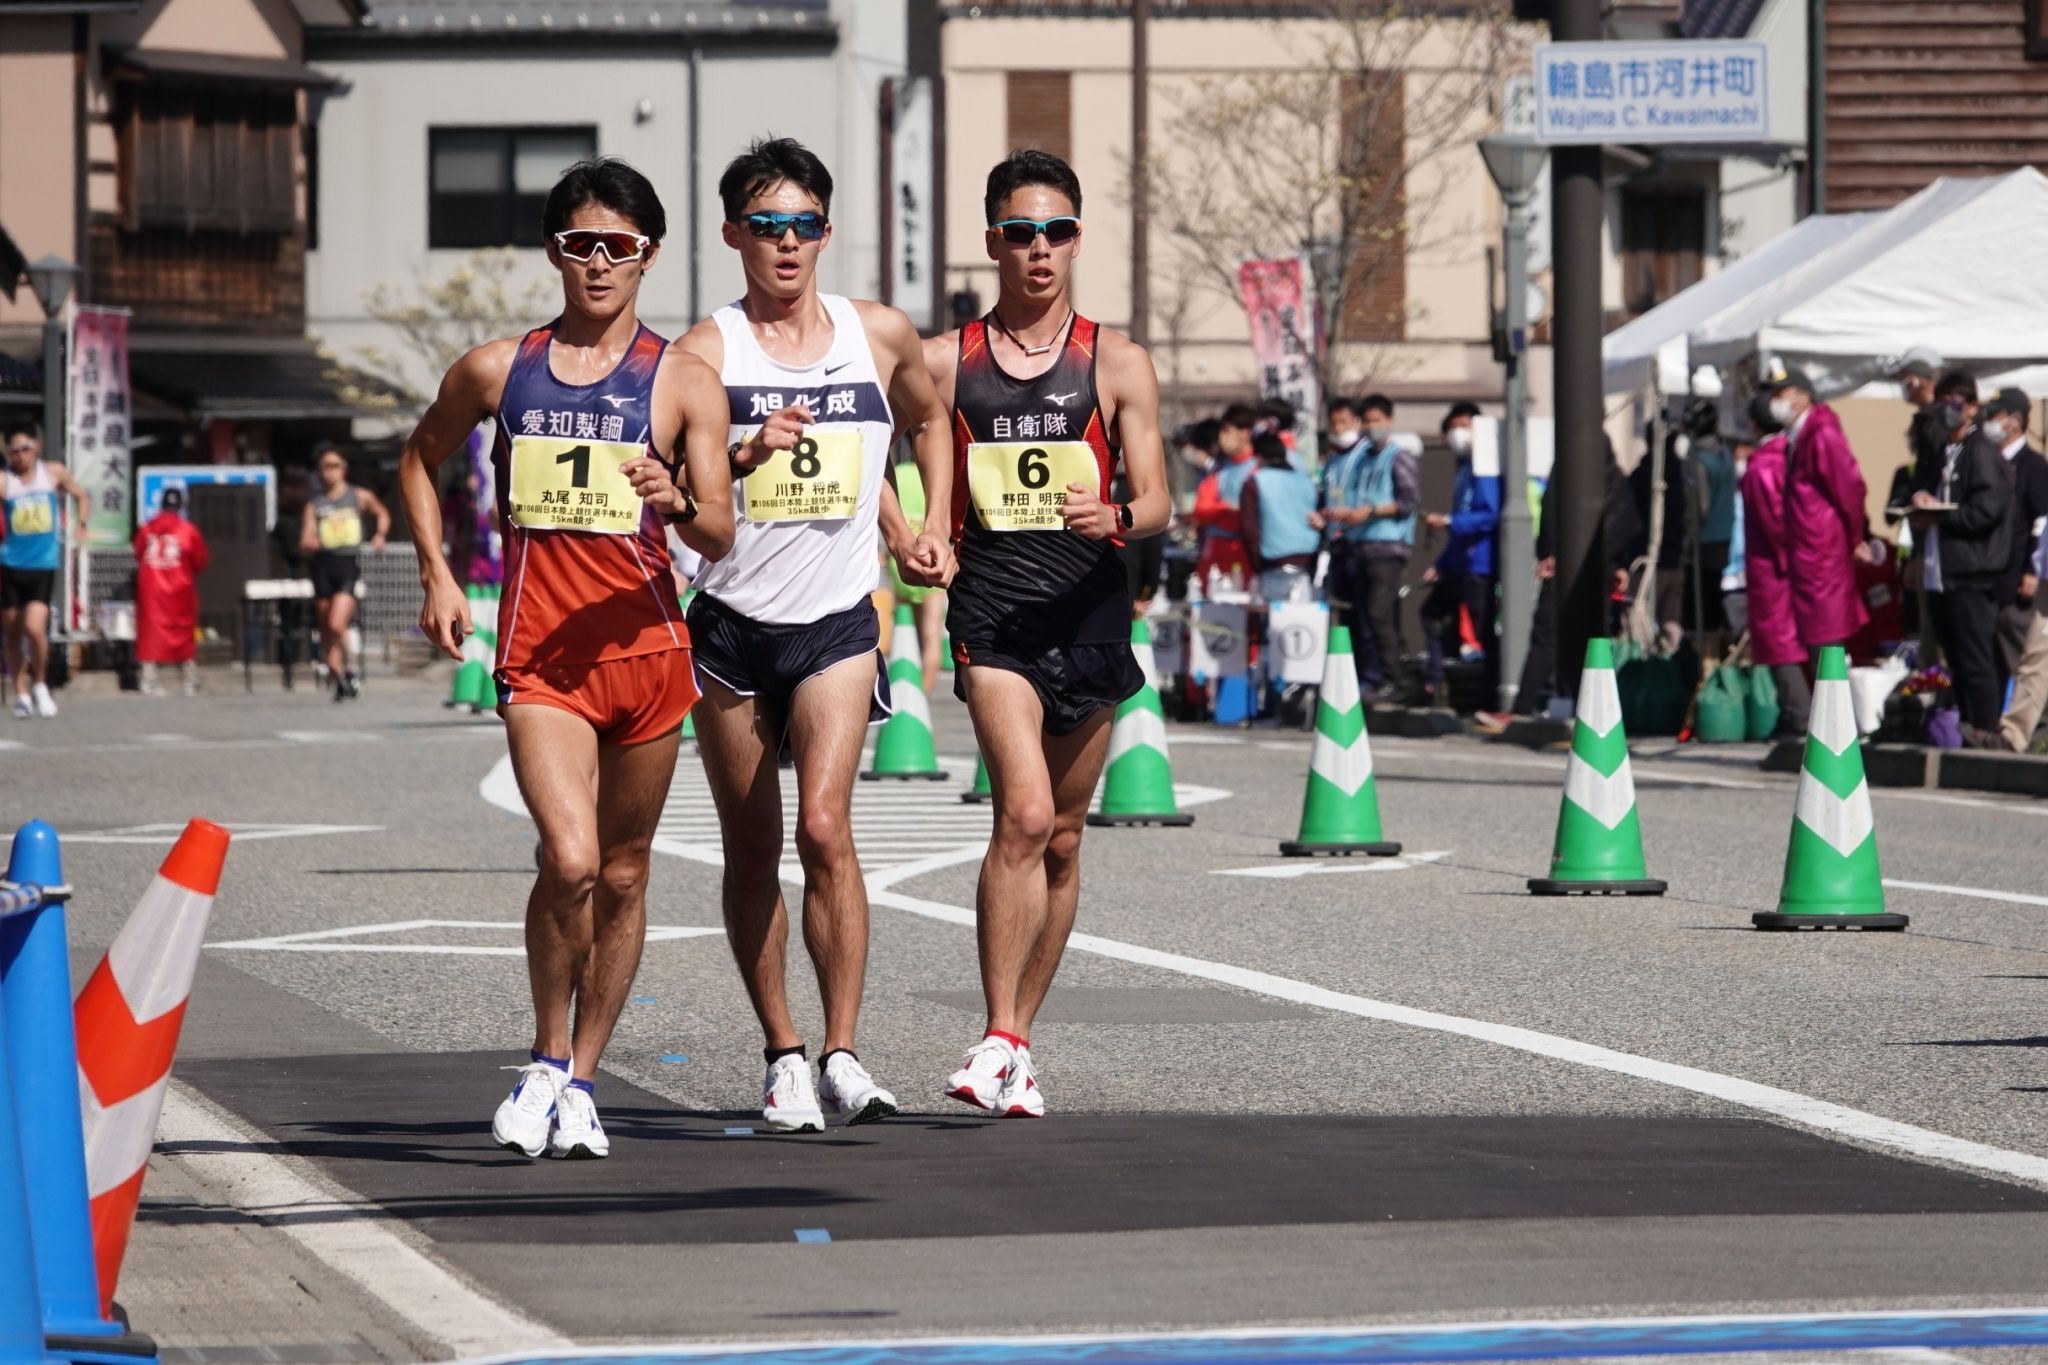 Masatora Kawano on his way to 35km race walk victory at the 106th Japan National Championships Race Walking in Wajima